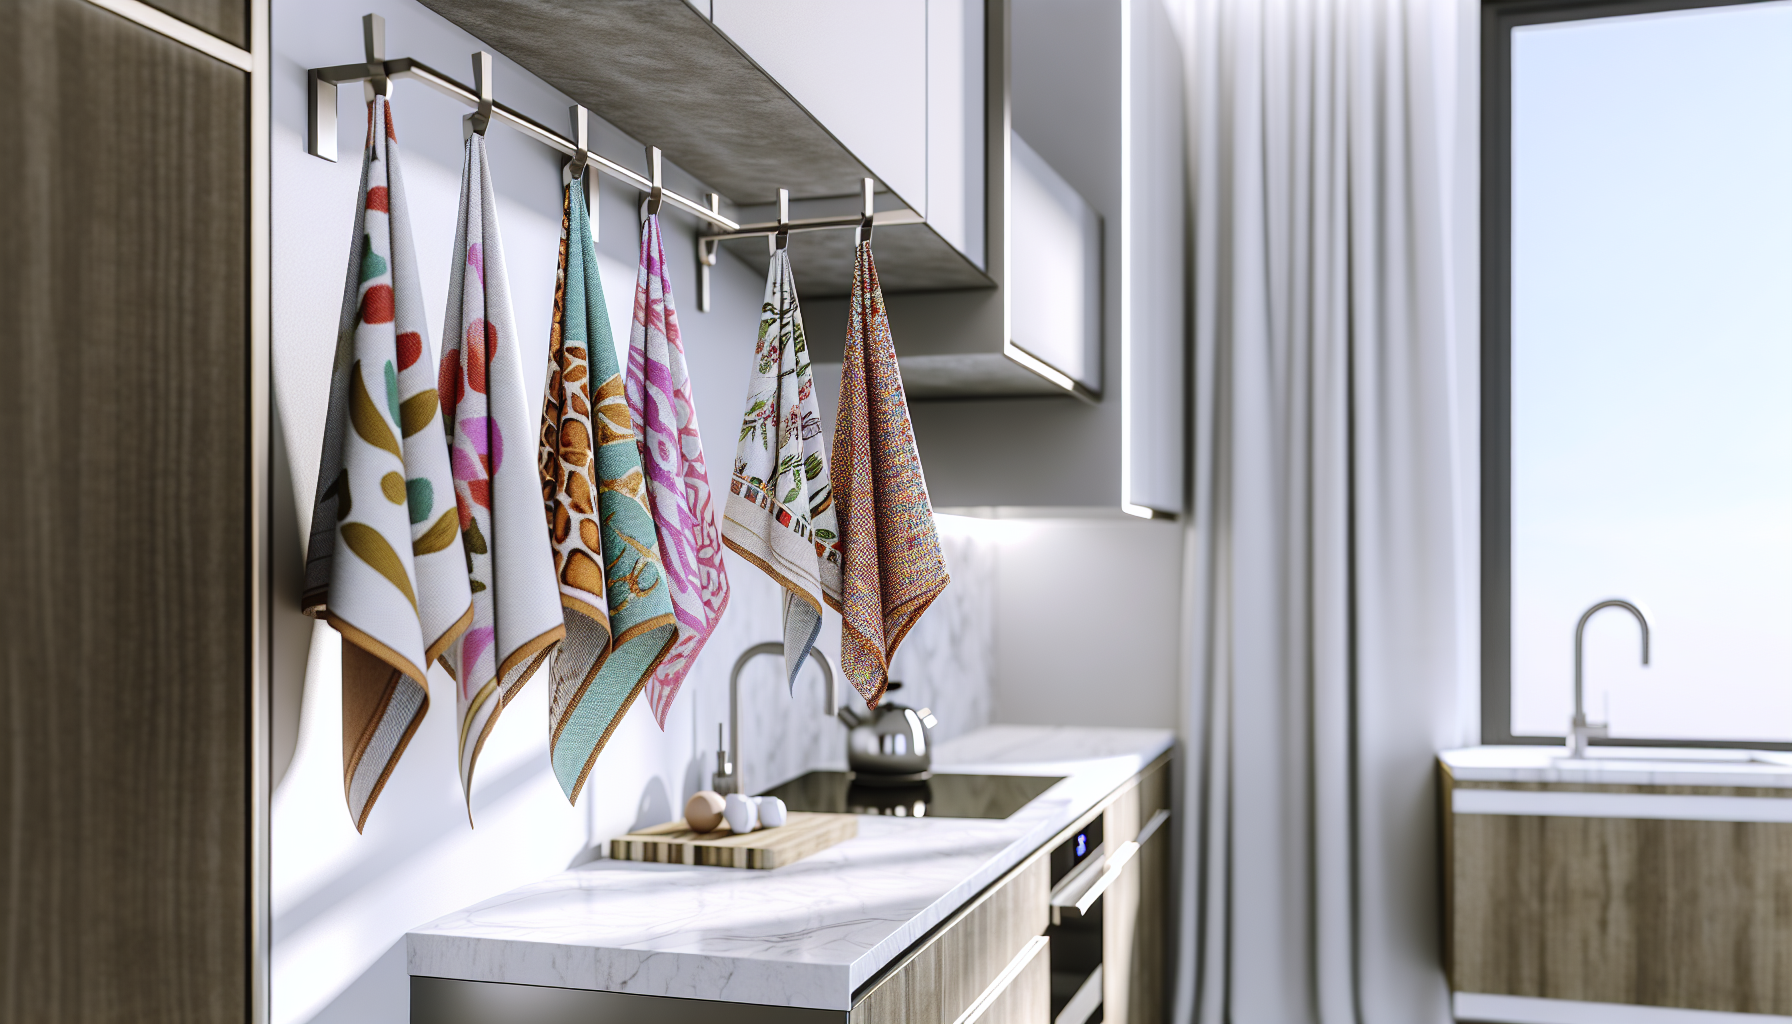 Set of Tea Towels, Luxury Kitchen Decor